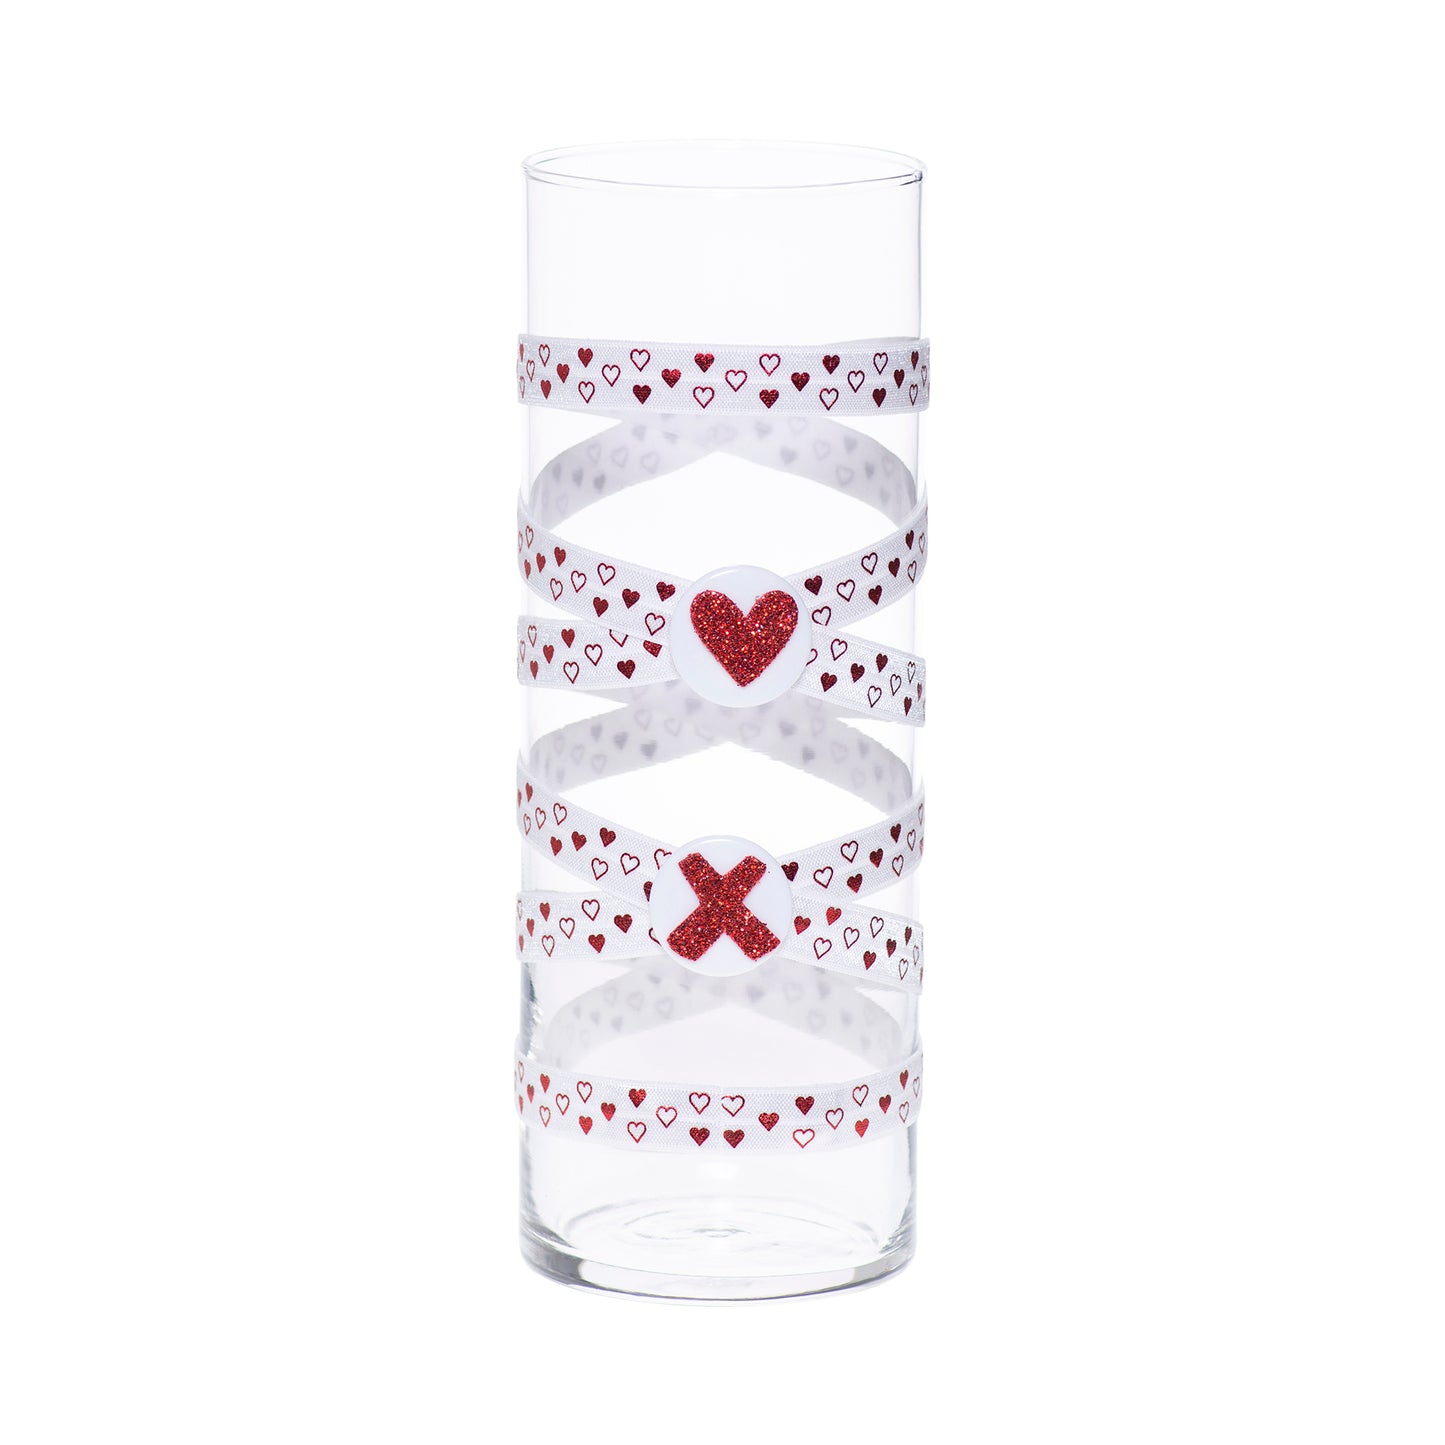 3.5" x 9.5" Vase White Red Shiny Hearts 5X 5 Medium XOX Lips Heart Valentine Love Collection Complete Set